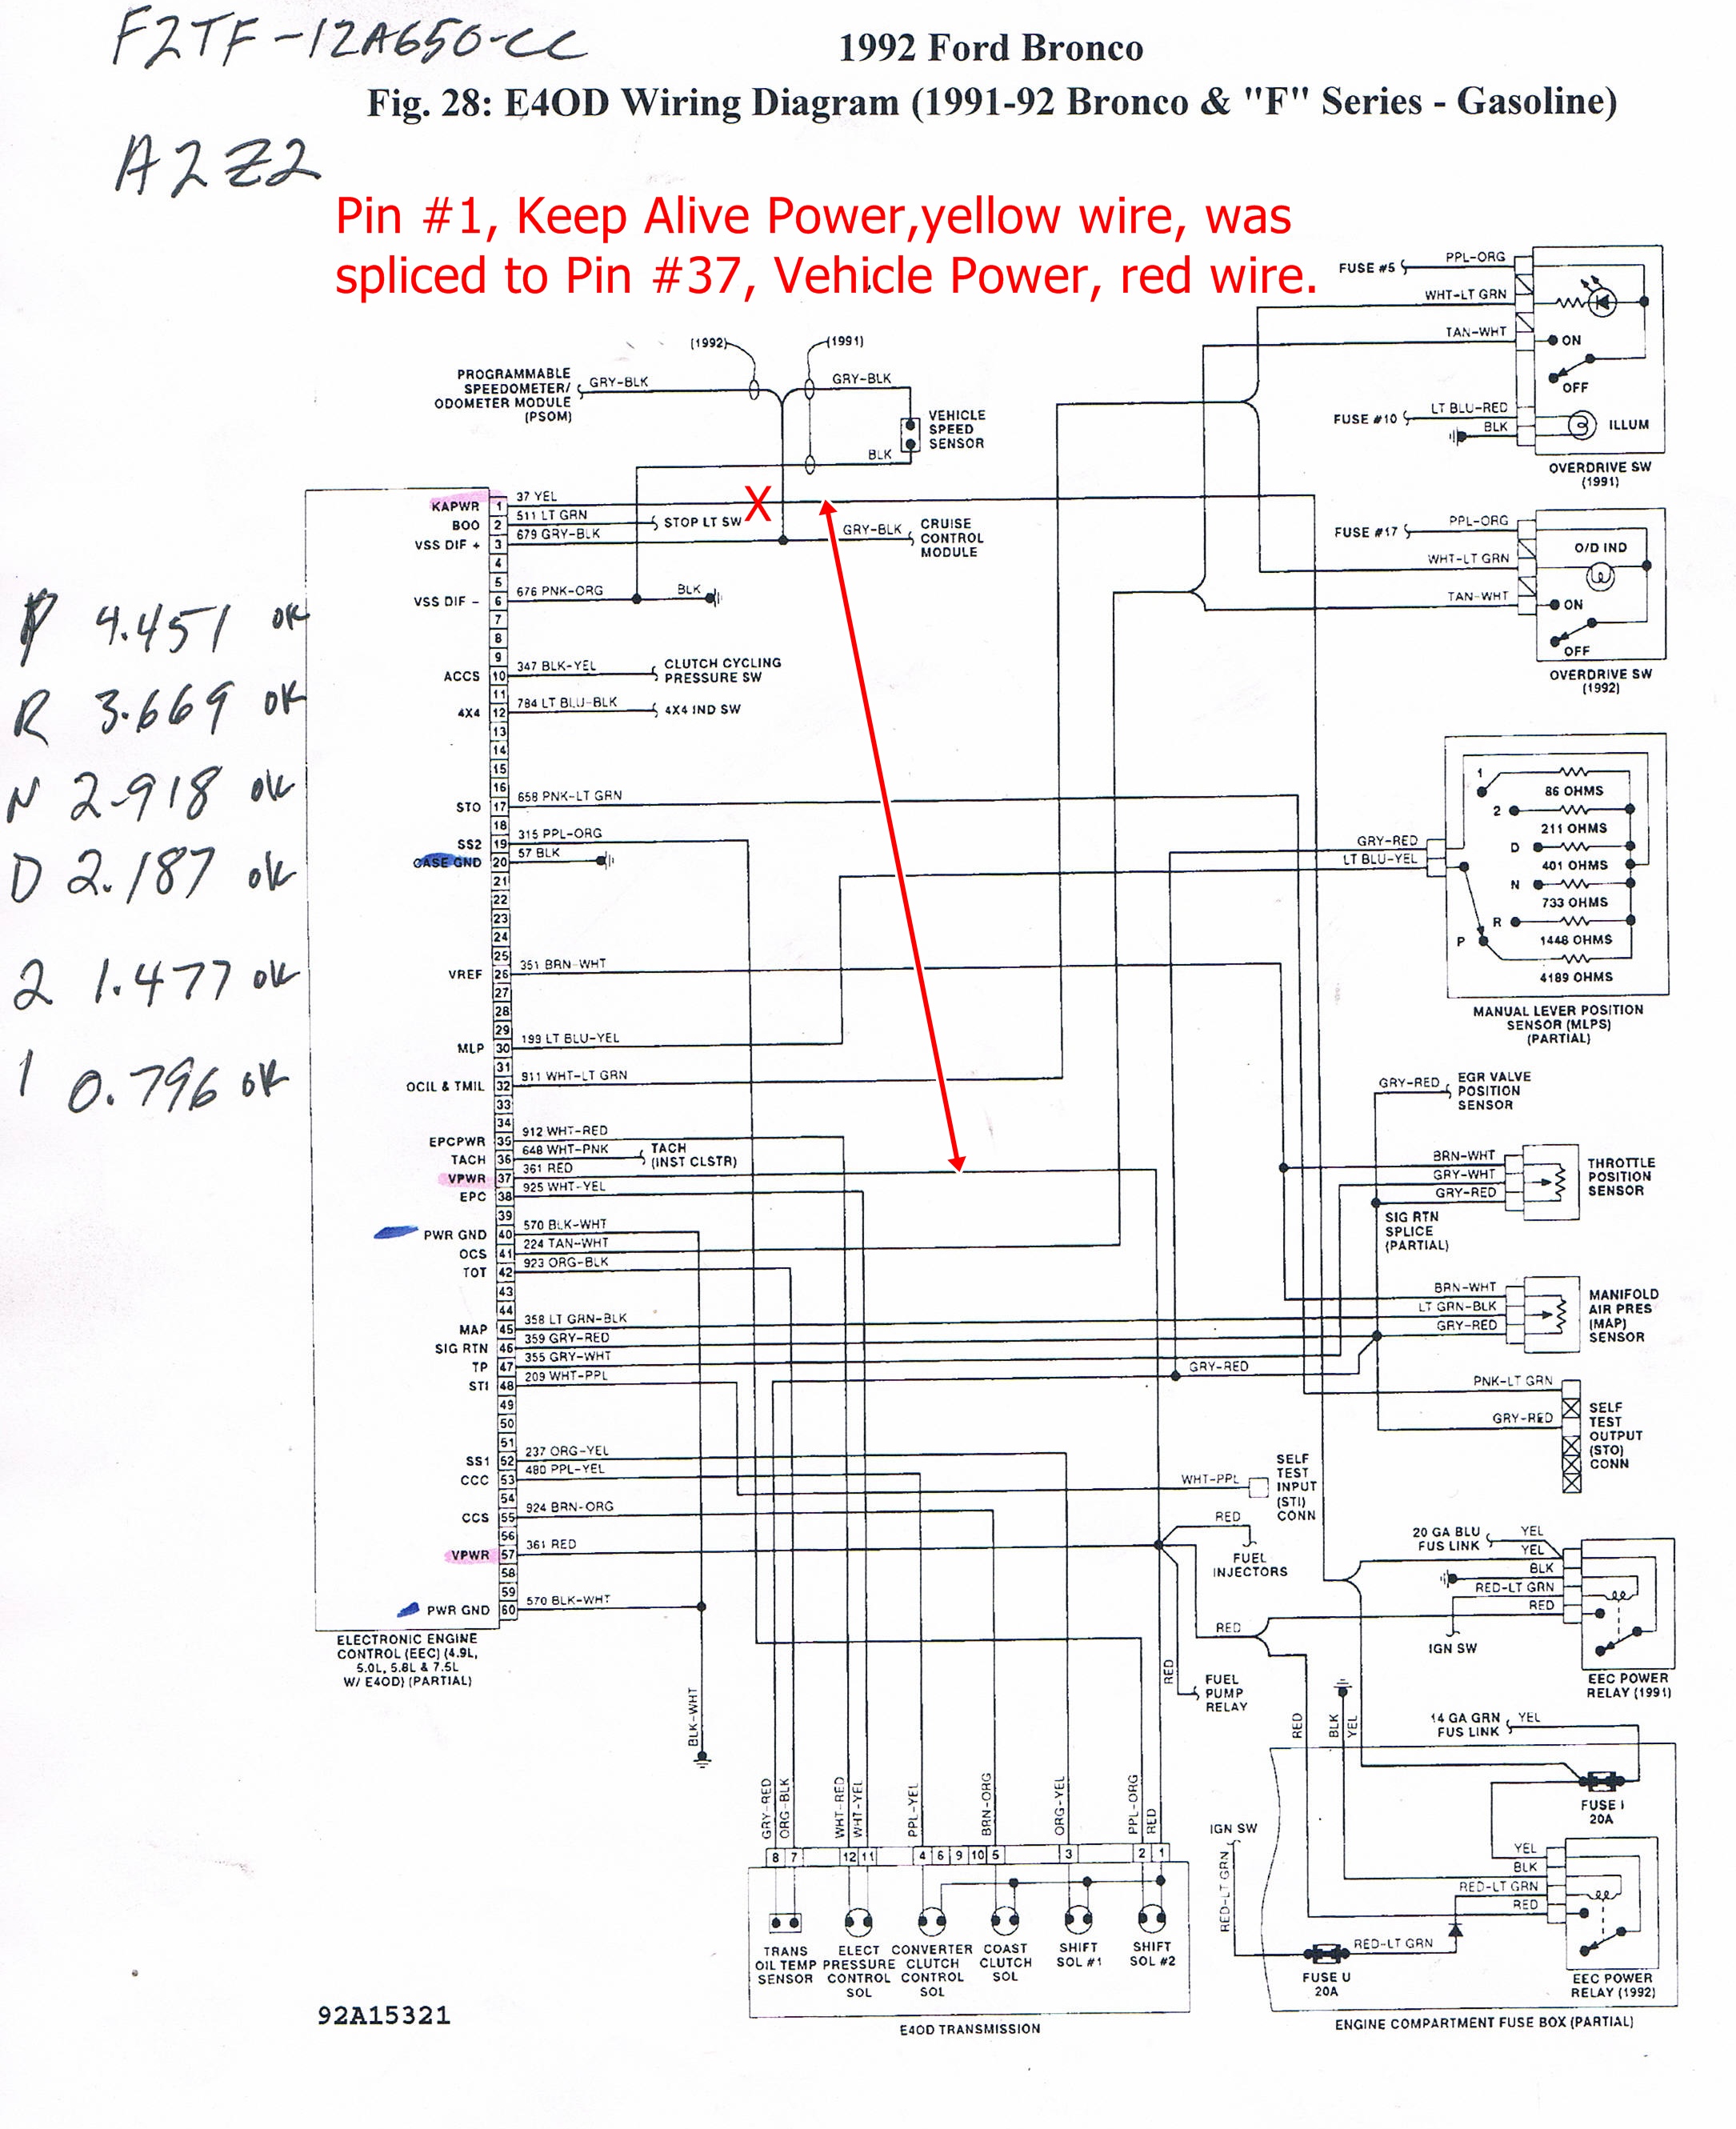 Chrysler transmission control module problem #2